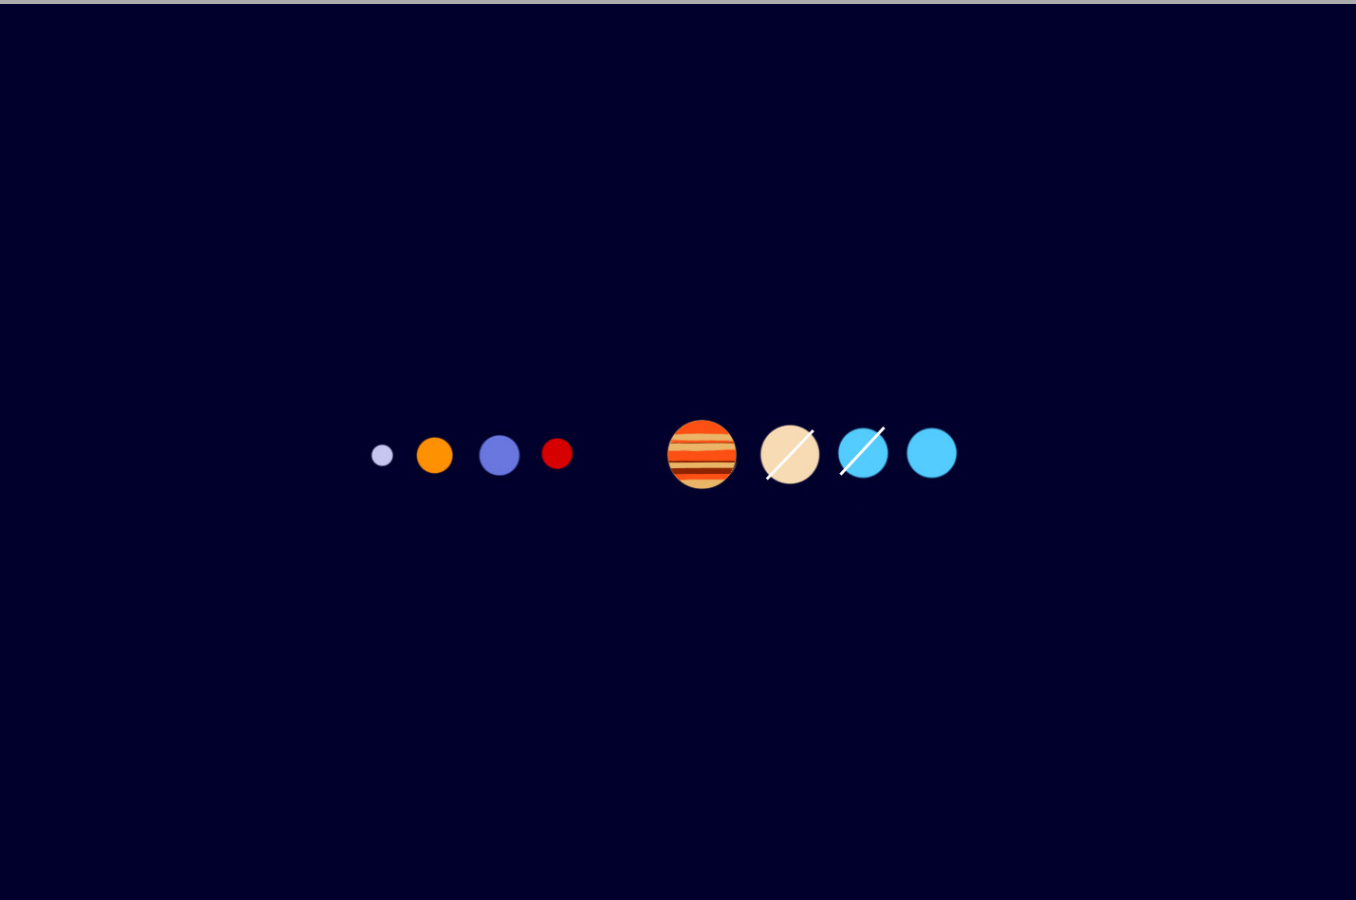 Minimalist Wallpaper Of Our Solar System Original Content